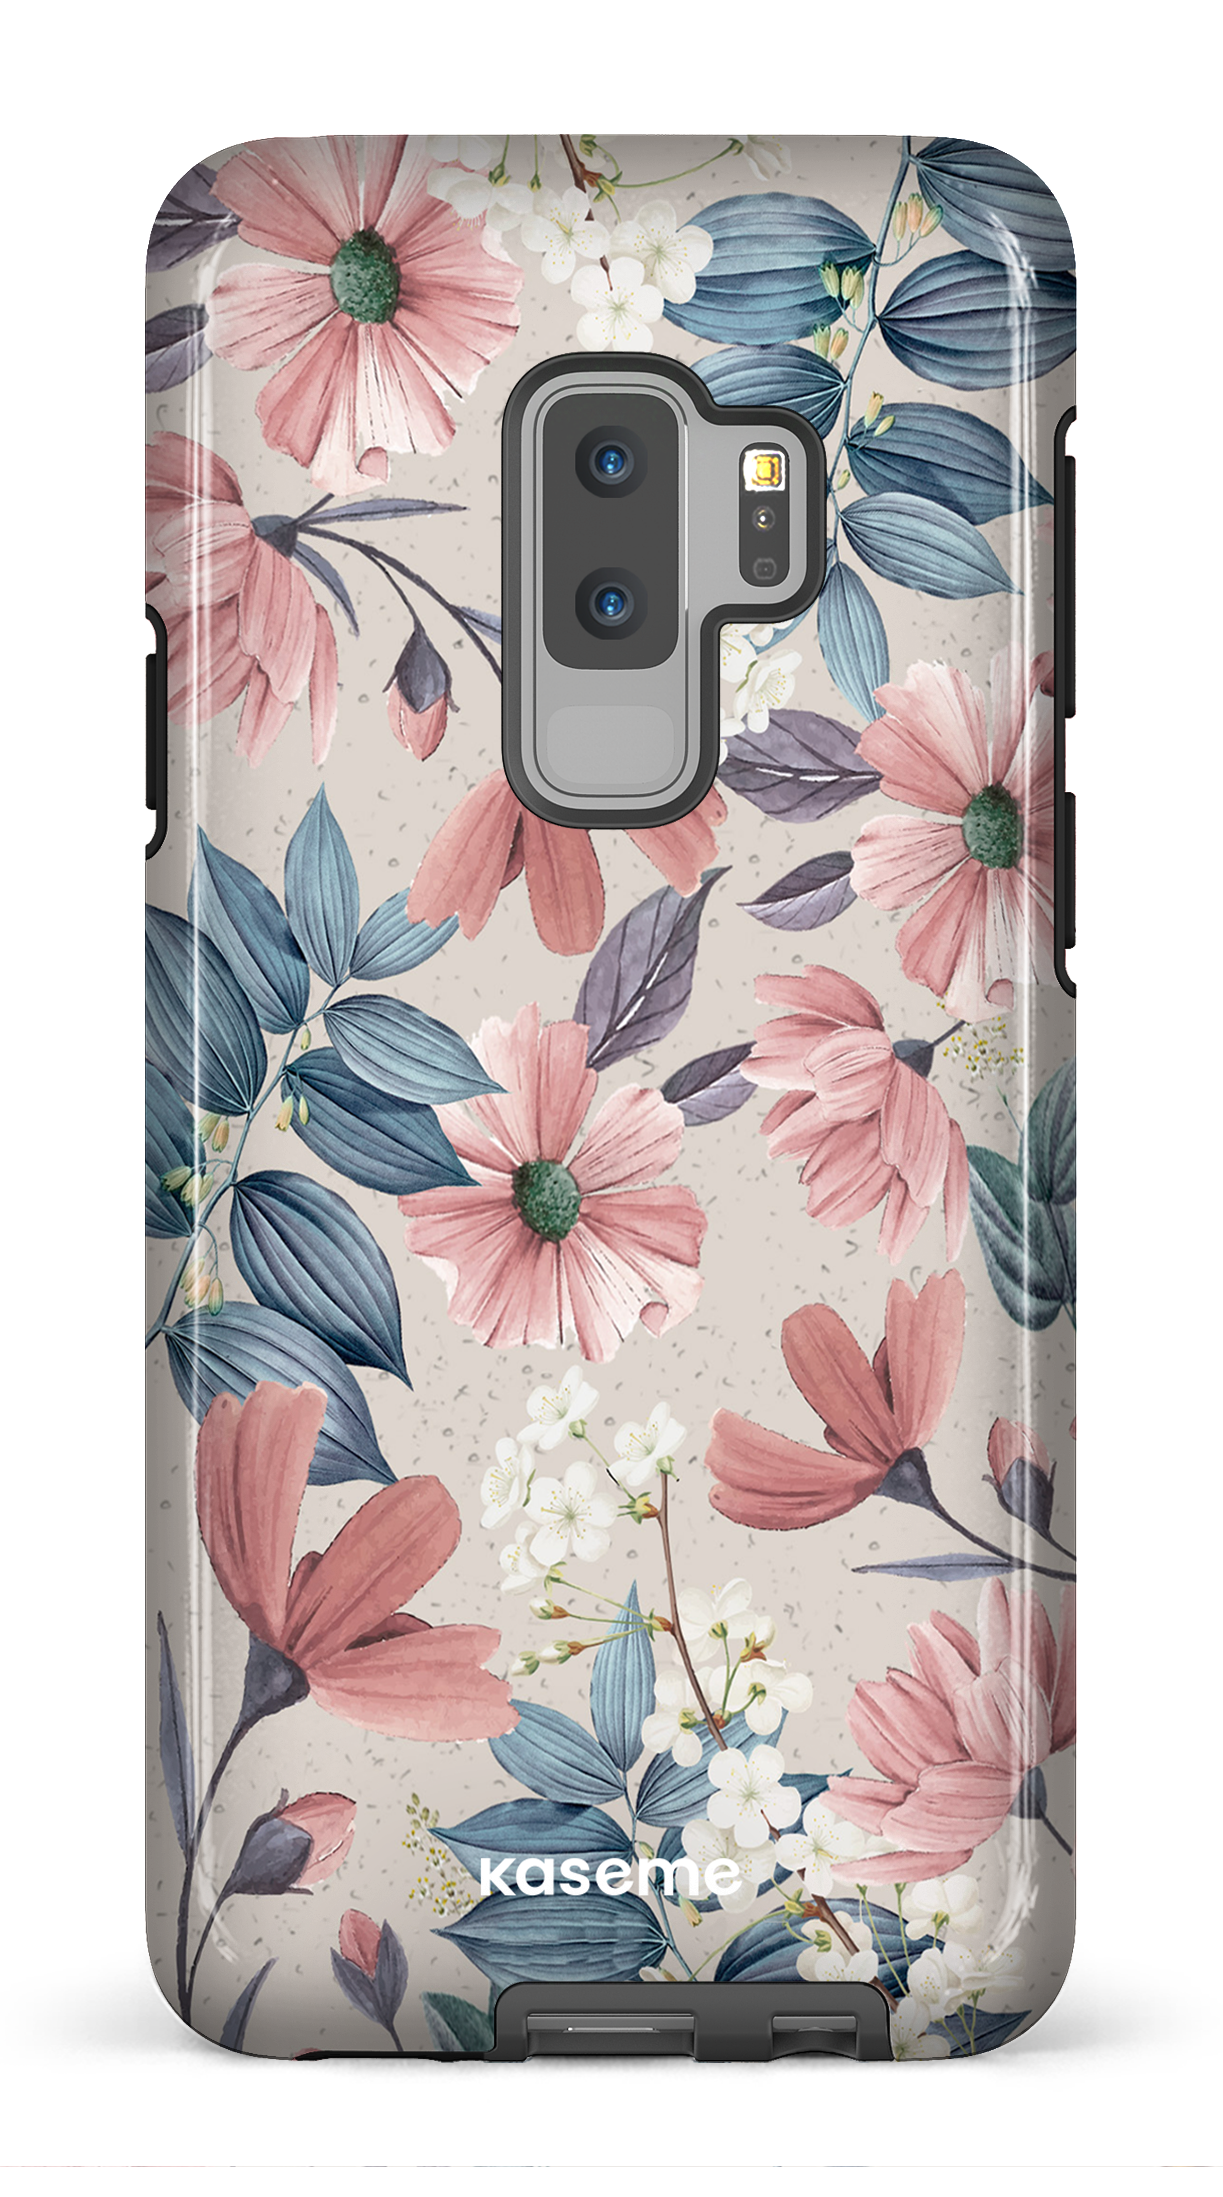 Fall flowers - Galaxy S9 Plus